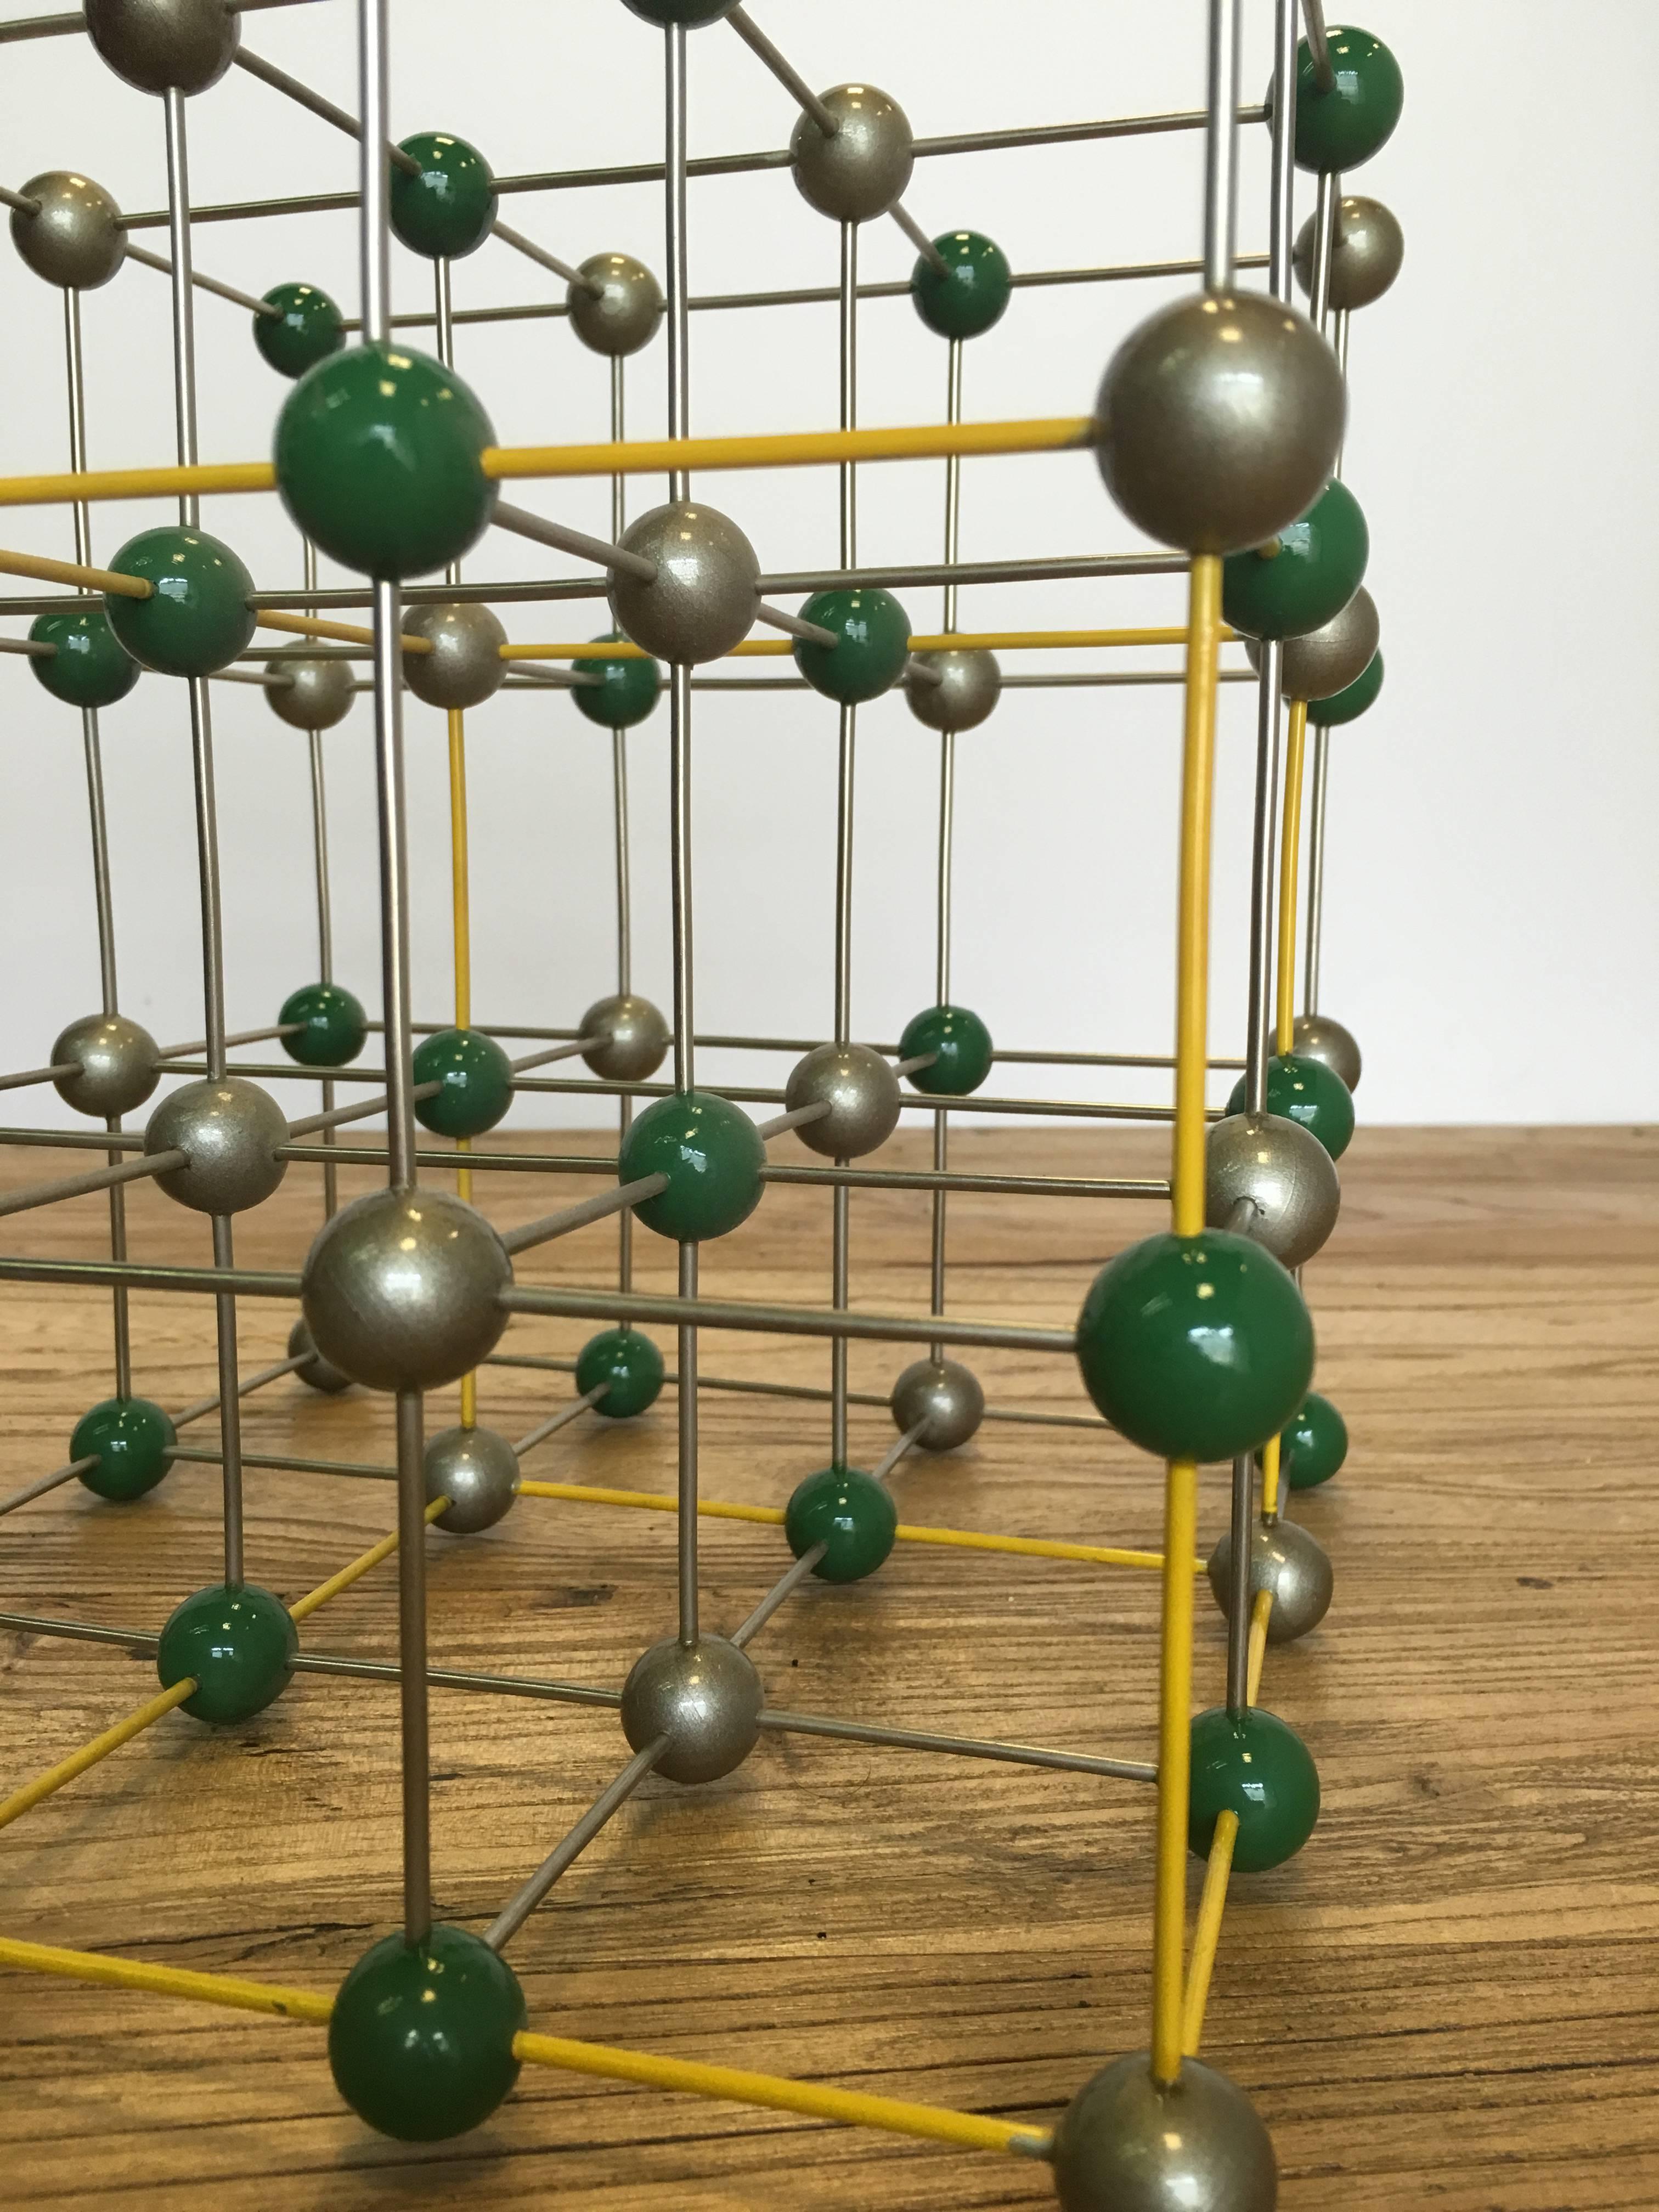 20th Century Vintage Ball and Stick Molecular Model of Salt